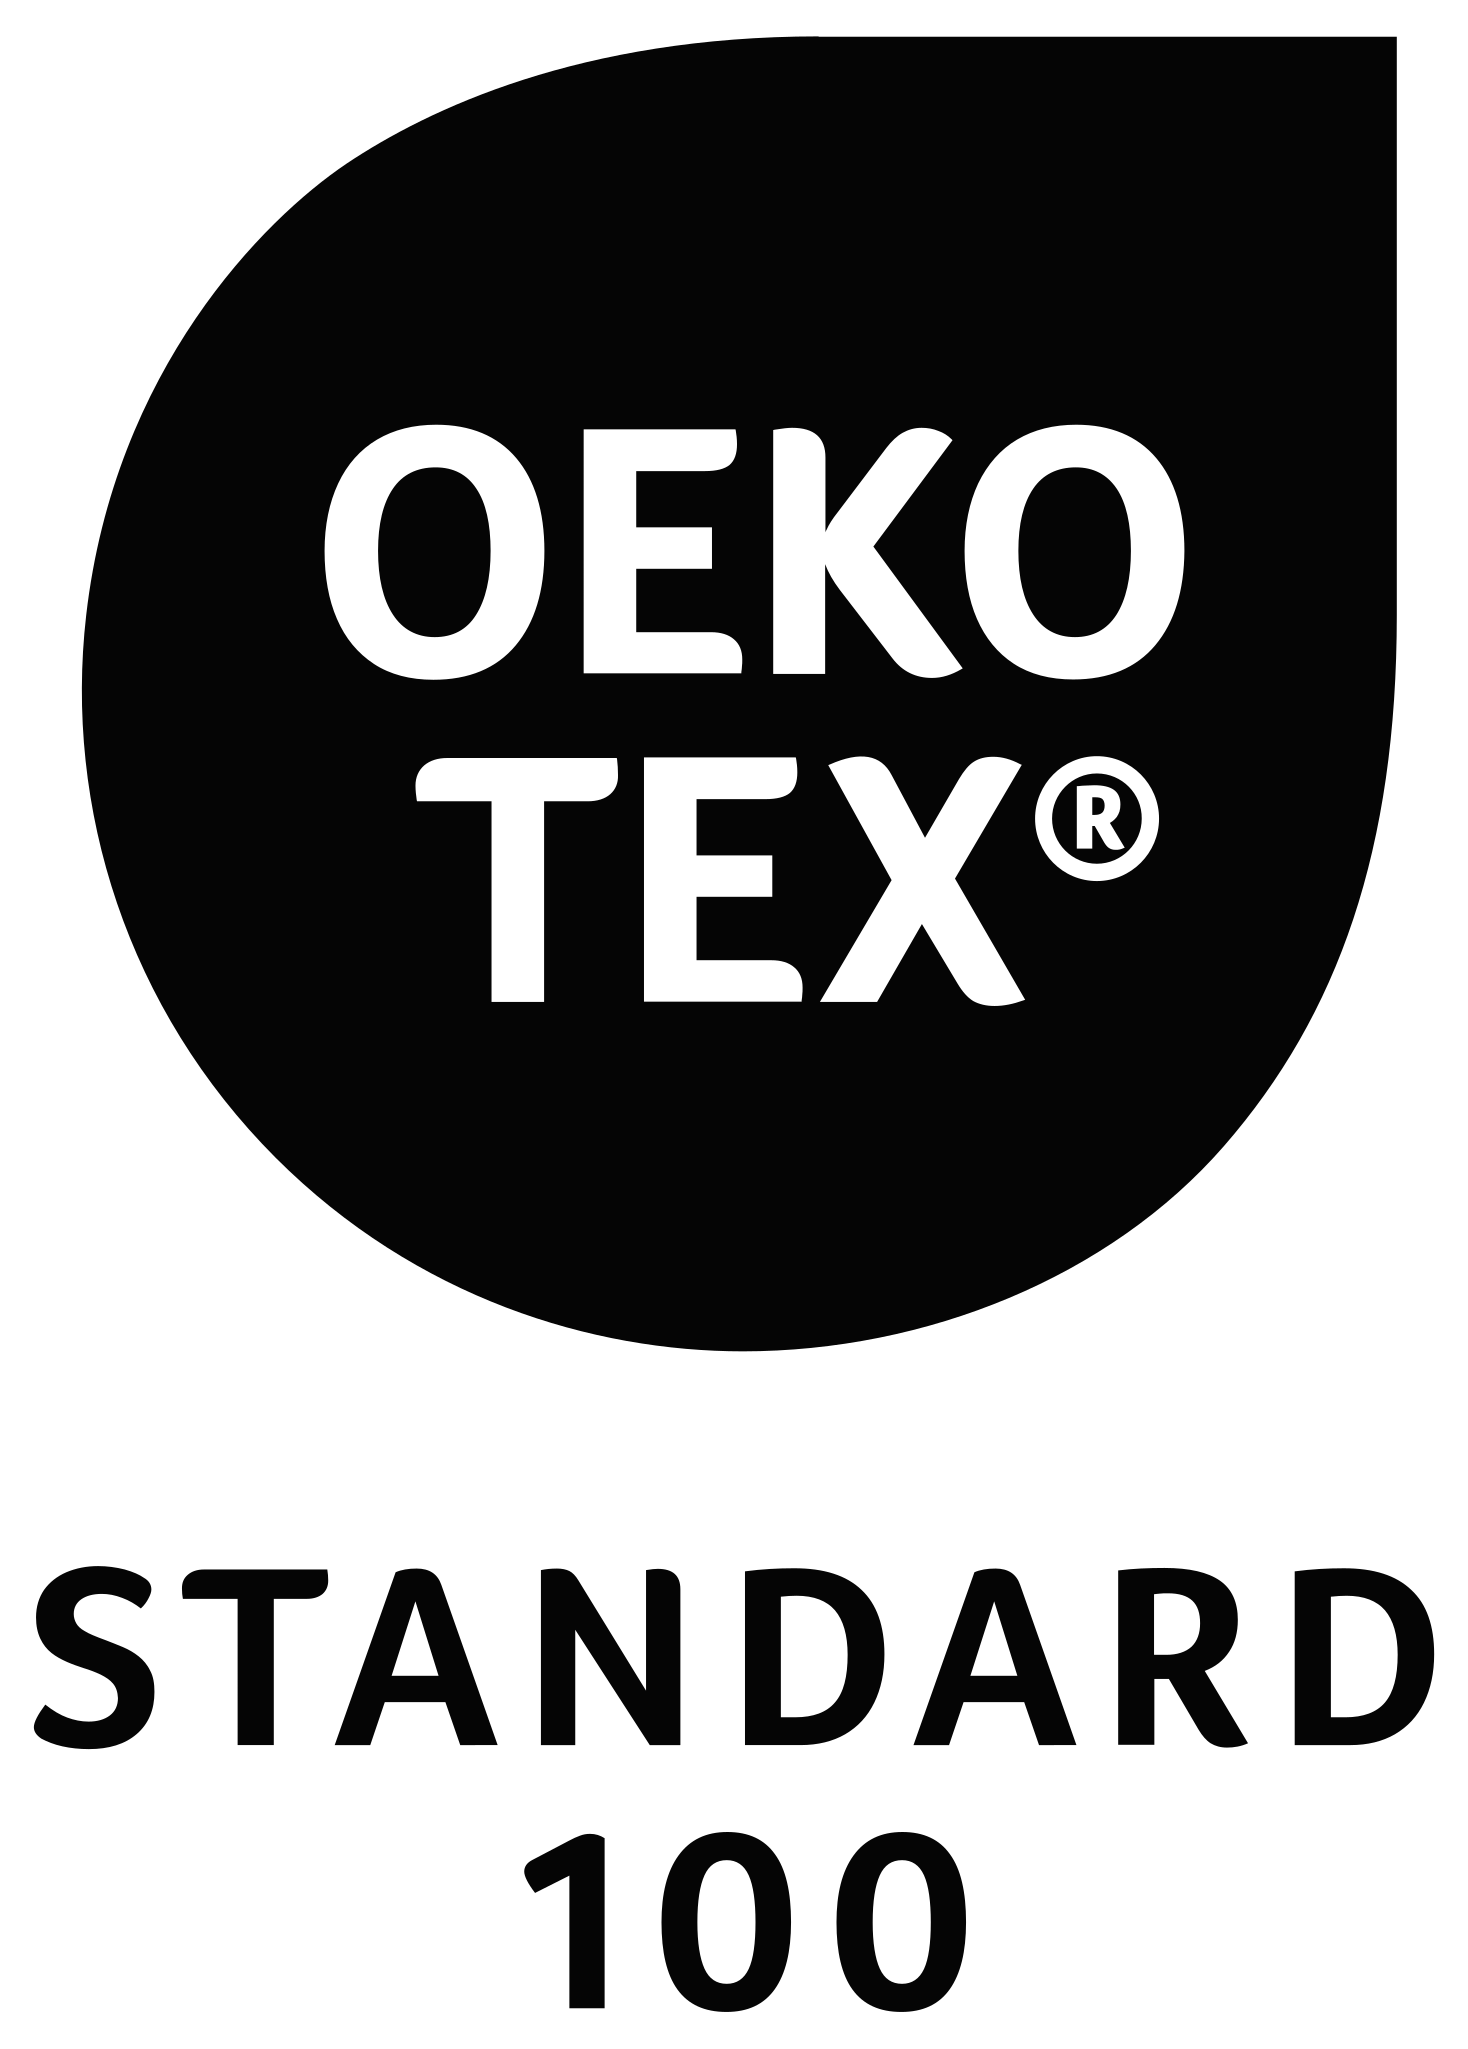 File:Oeko tex - standard 100 - 11 2022.svg - Wikimedia Commons